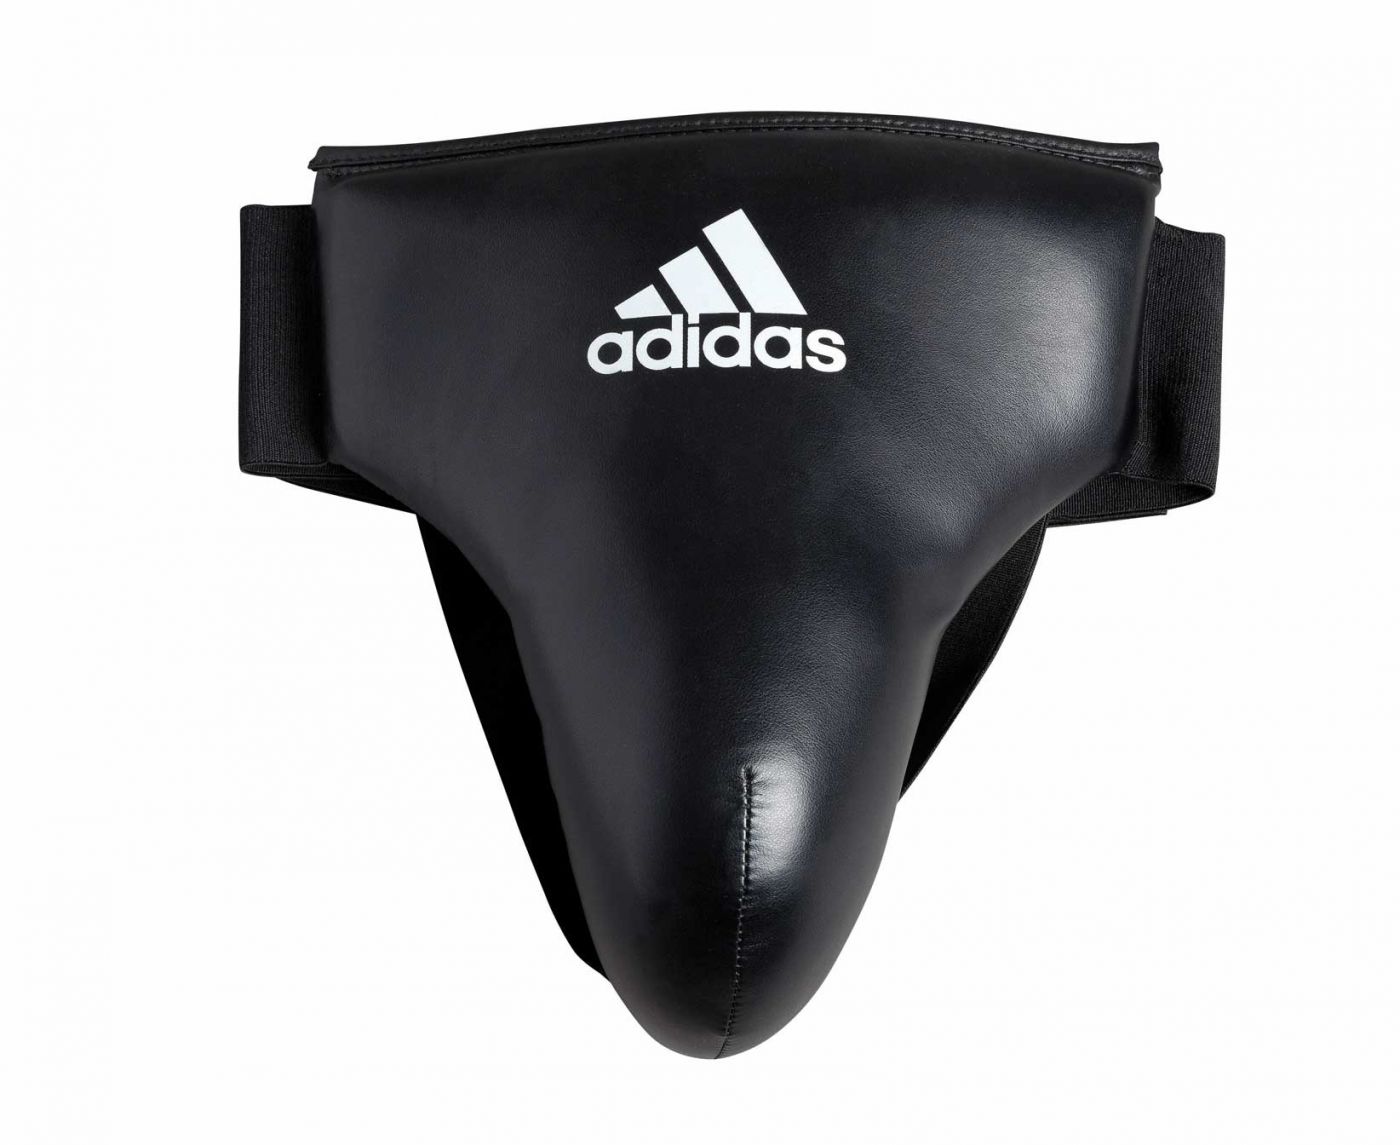 Защита паха Adidas мужская Anatomical Groin Guard черная, размер L, артикул adiBP05